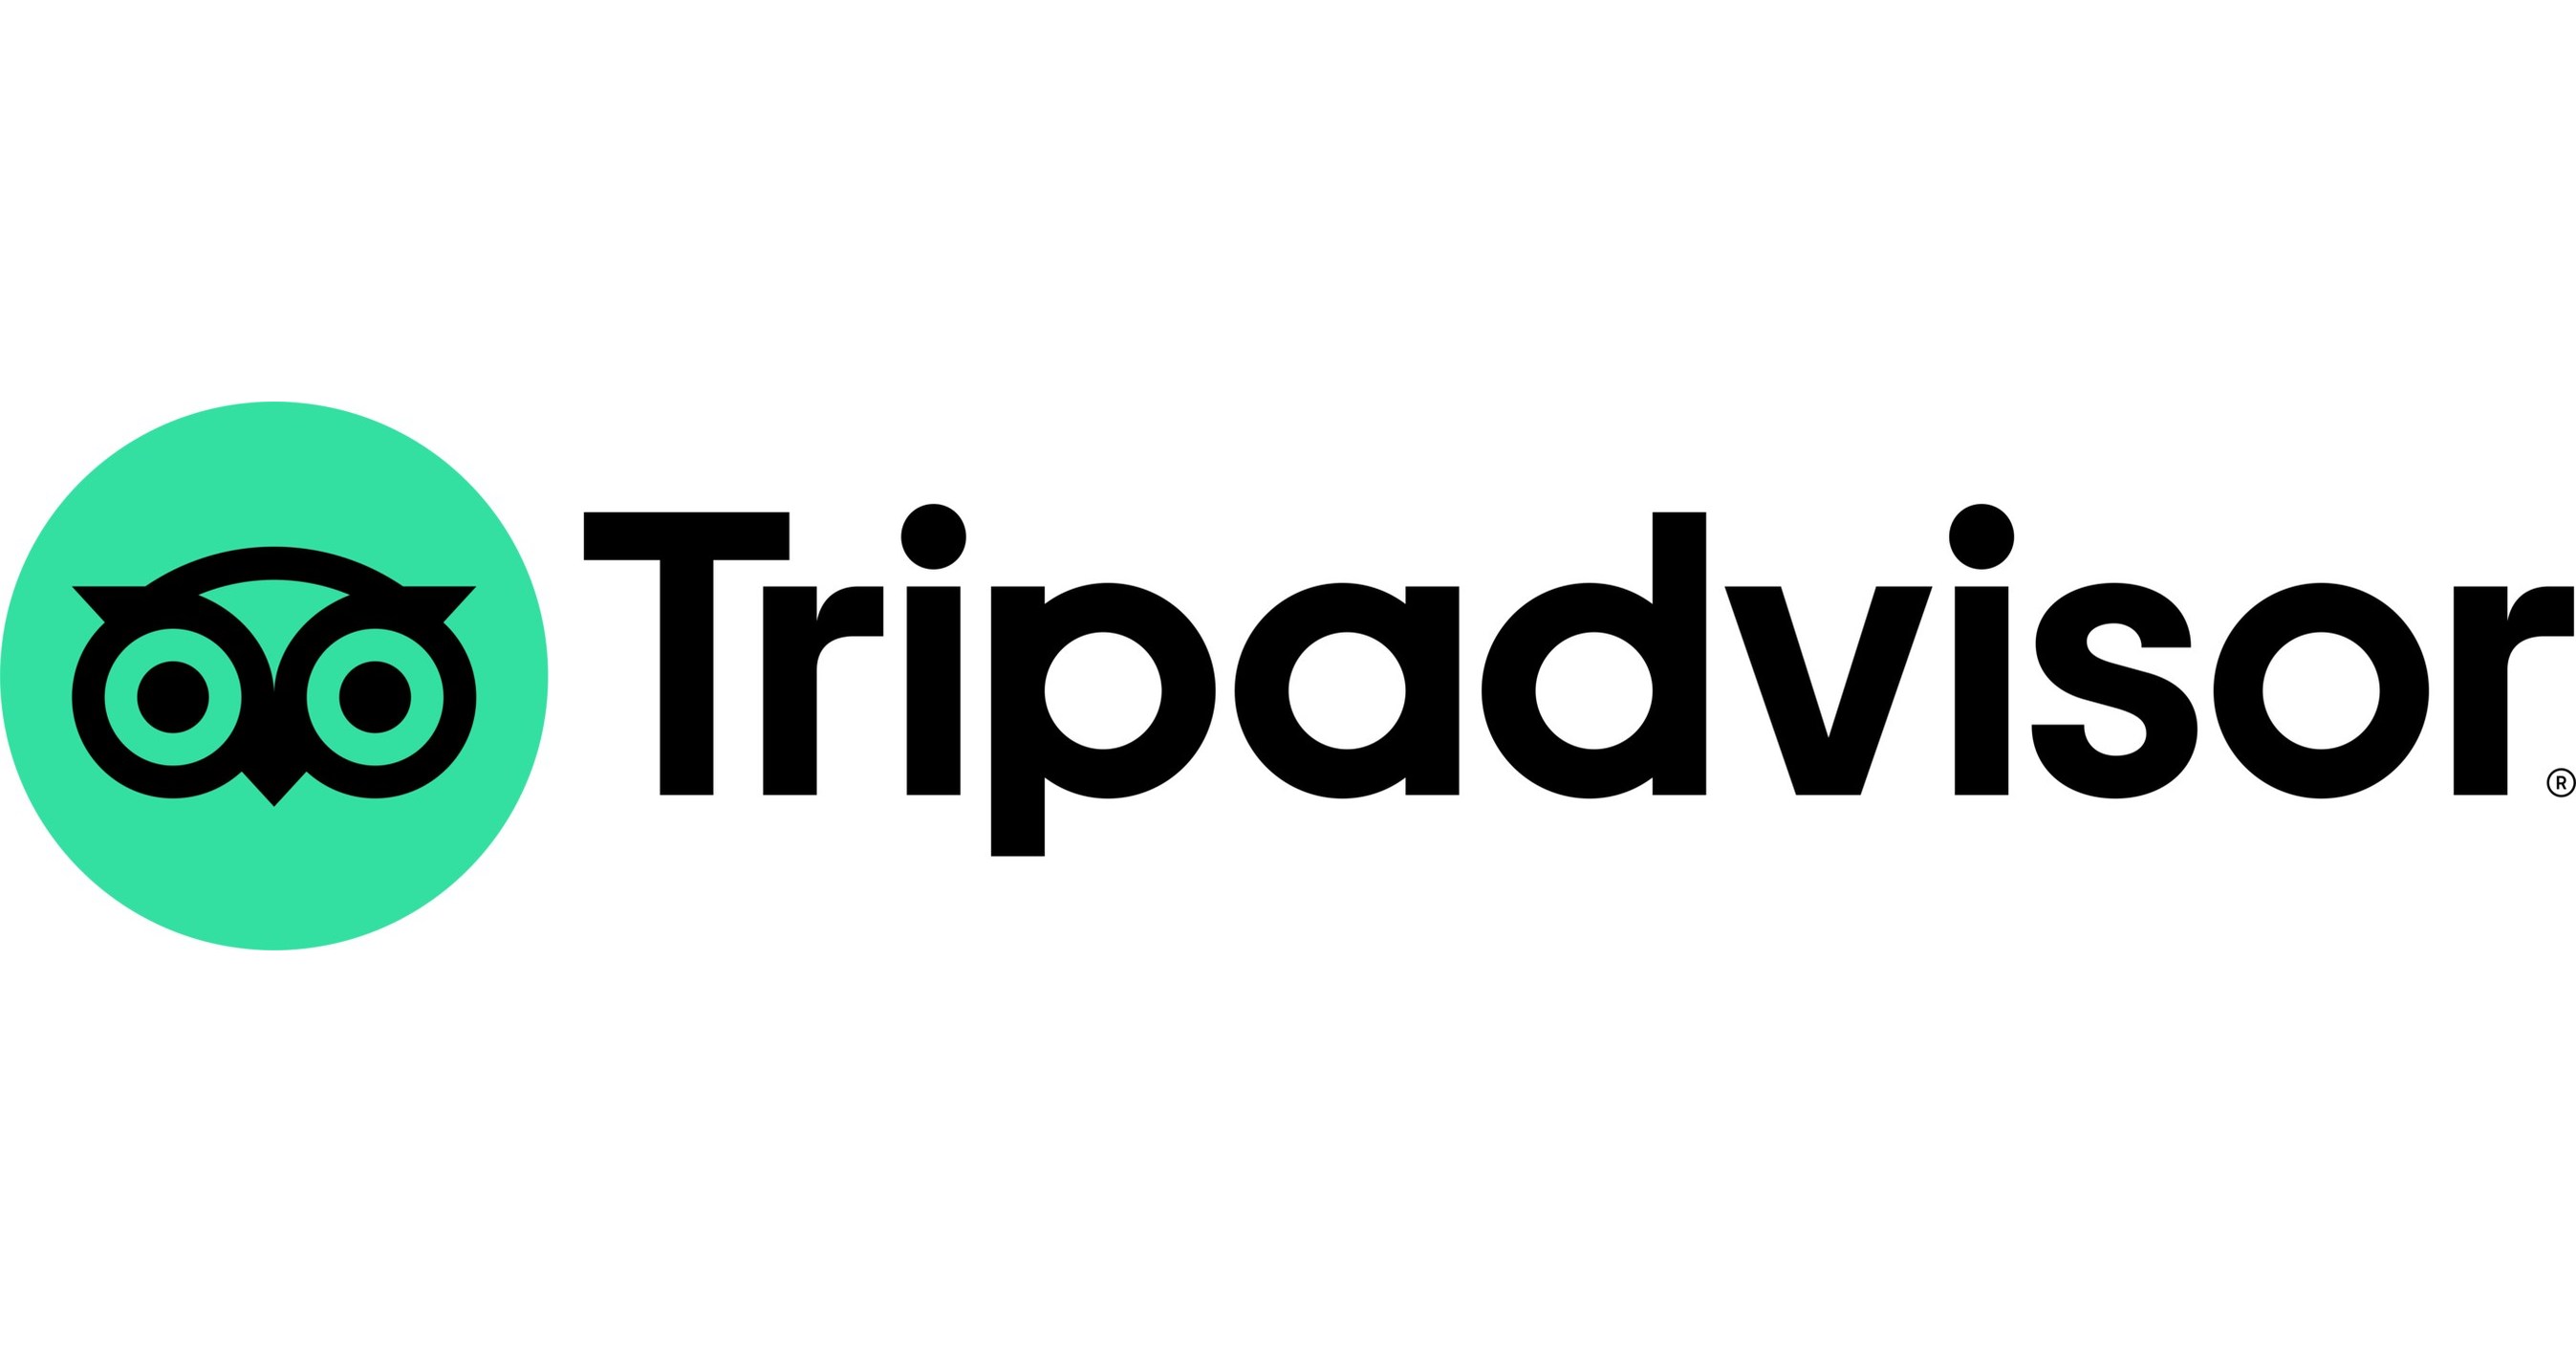 Manchester, England 2023: Best Places to Visit - Tripadvisor